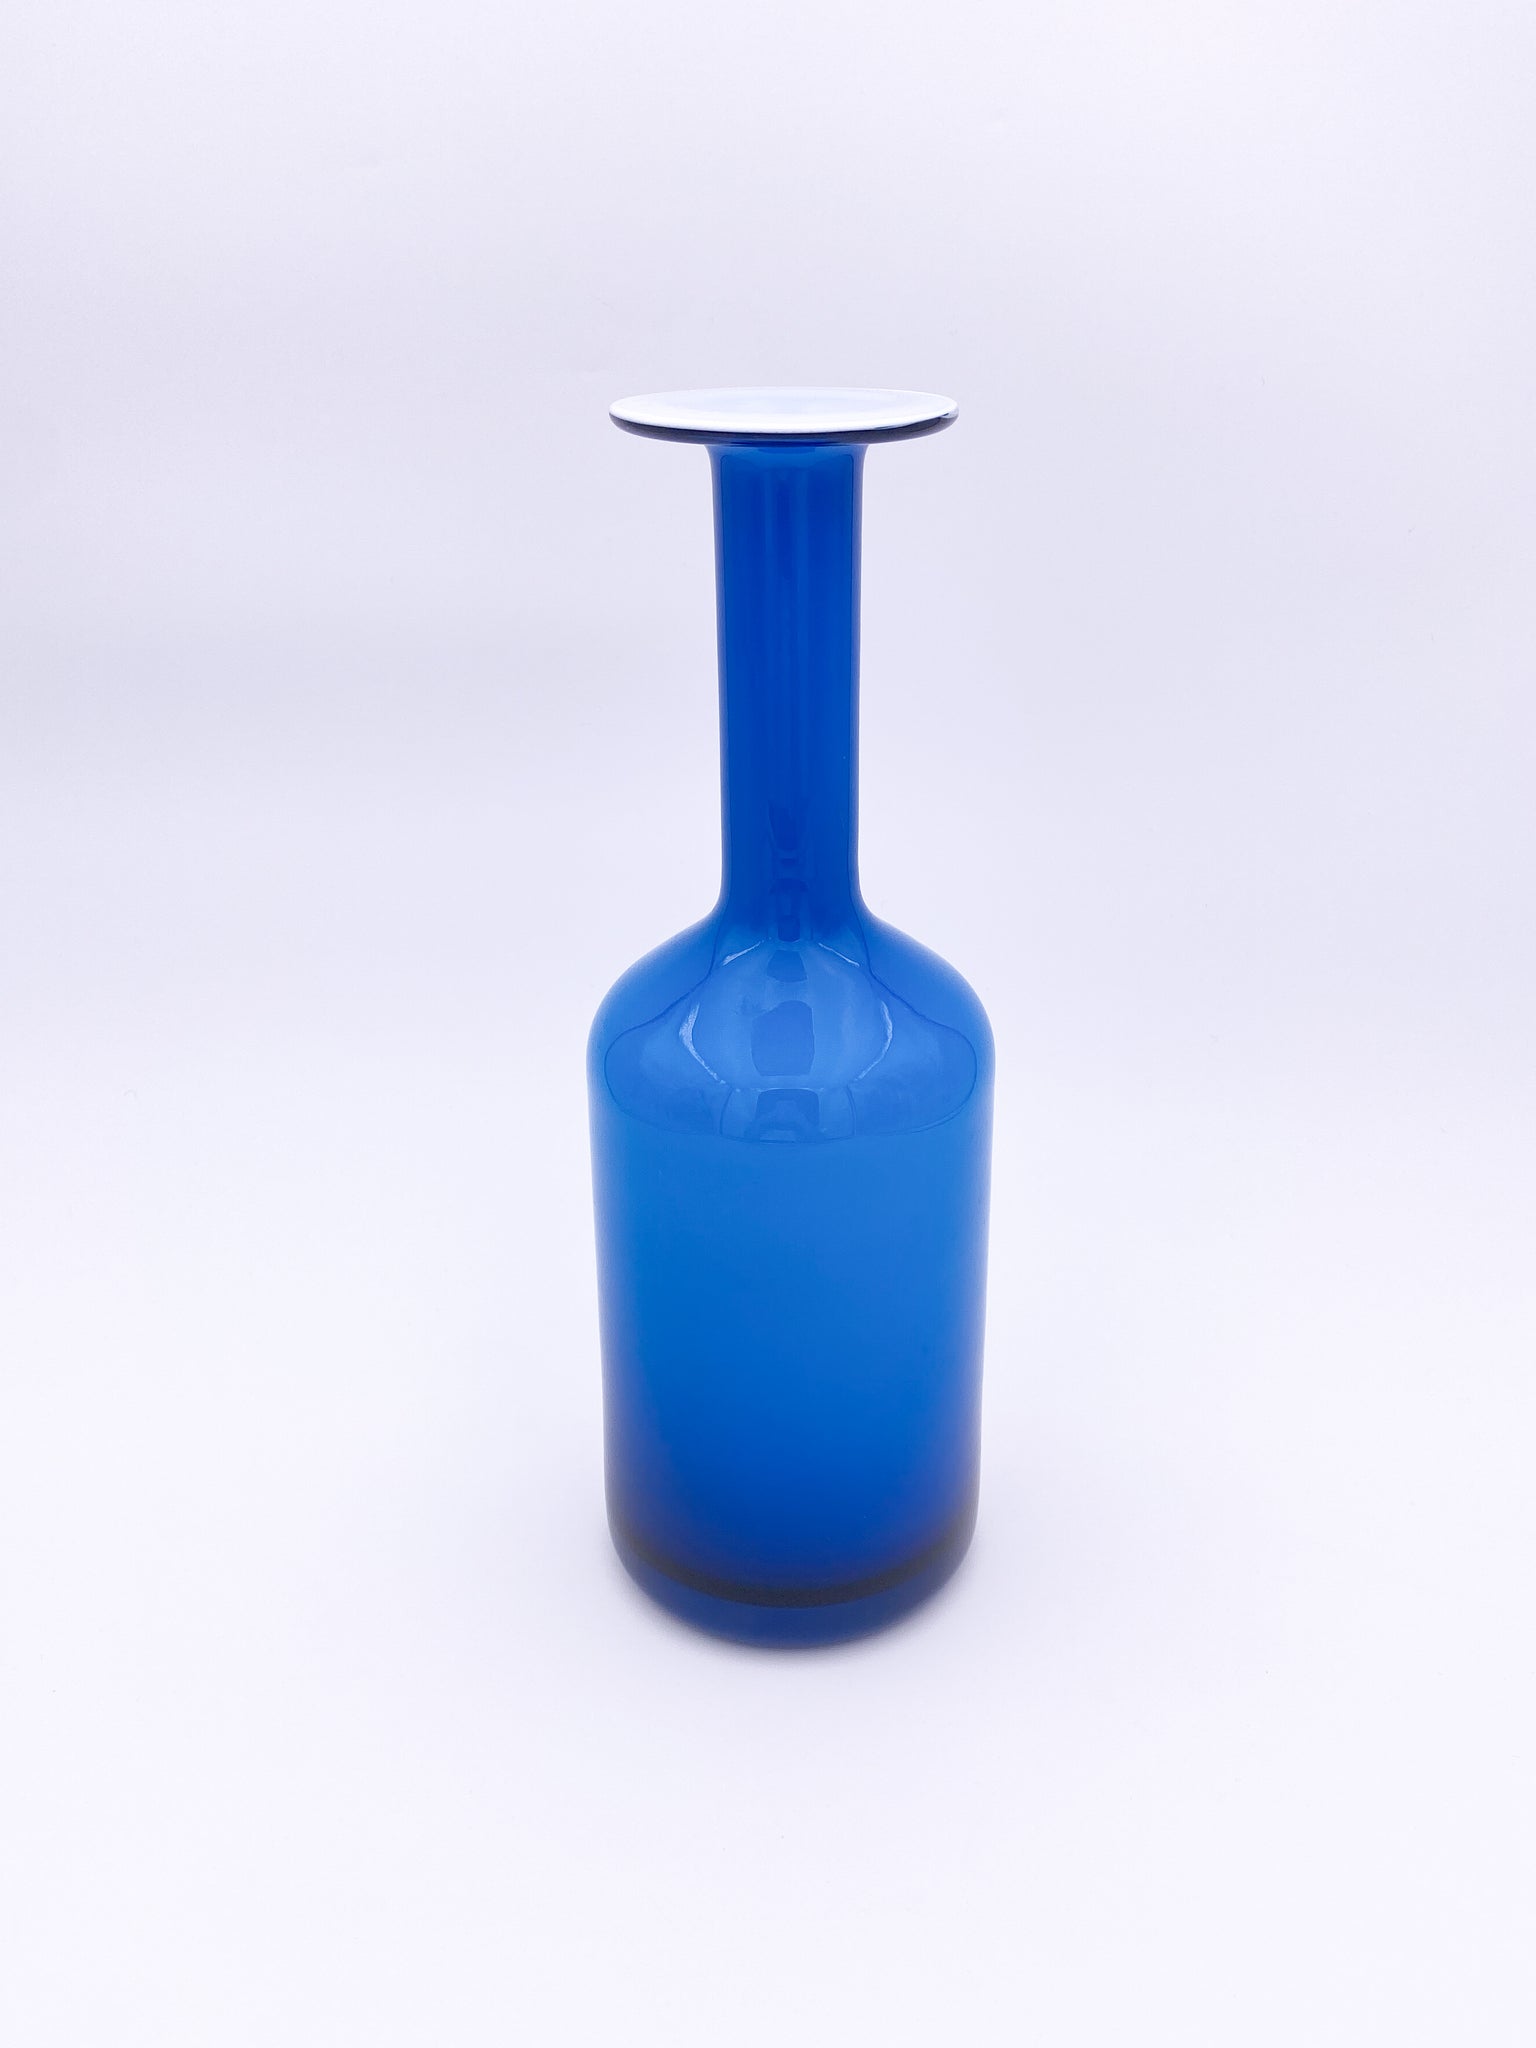 Mid-Century Modern Cased Glass Vase